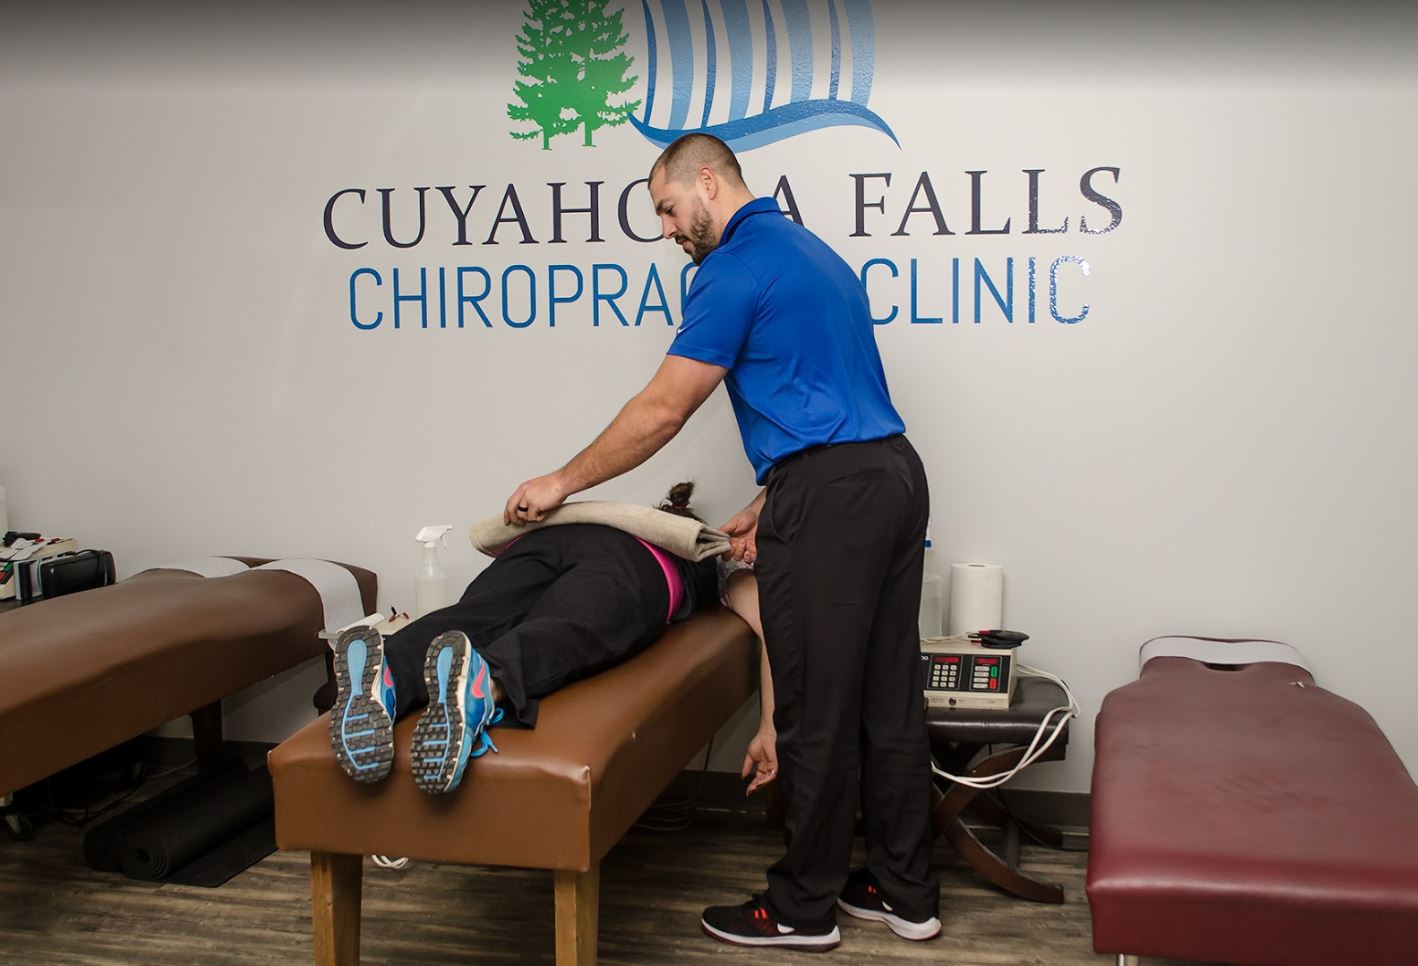 Cuyahoga Falls Chiropractic Clinic